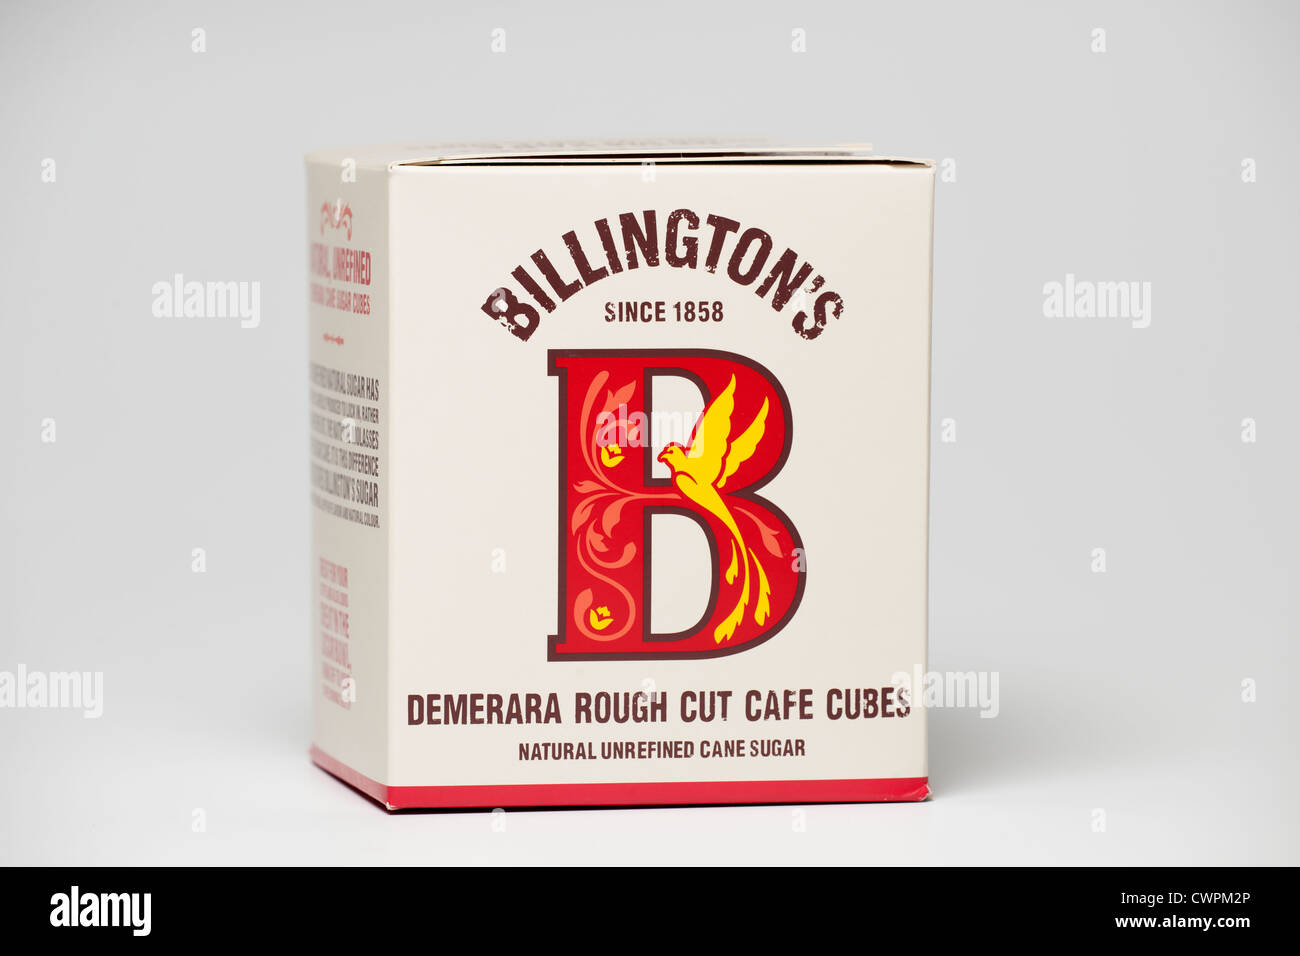 Box of Billingtons natural unrefined cane sugar Demerara rough cut cafe cubes Stock Photo